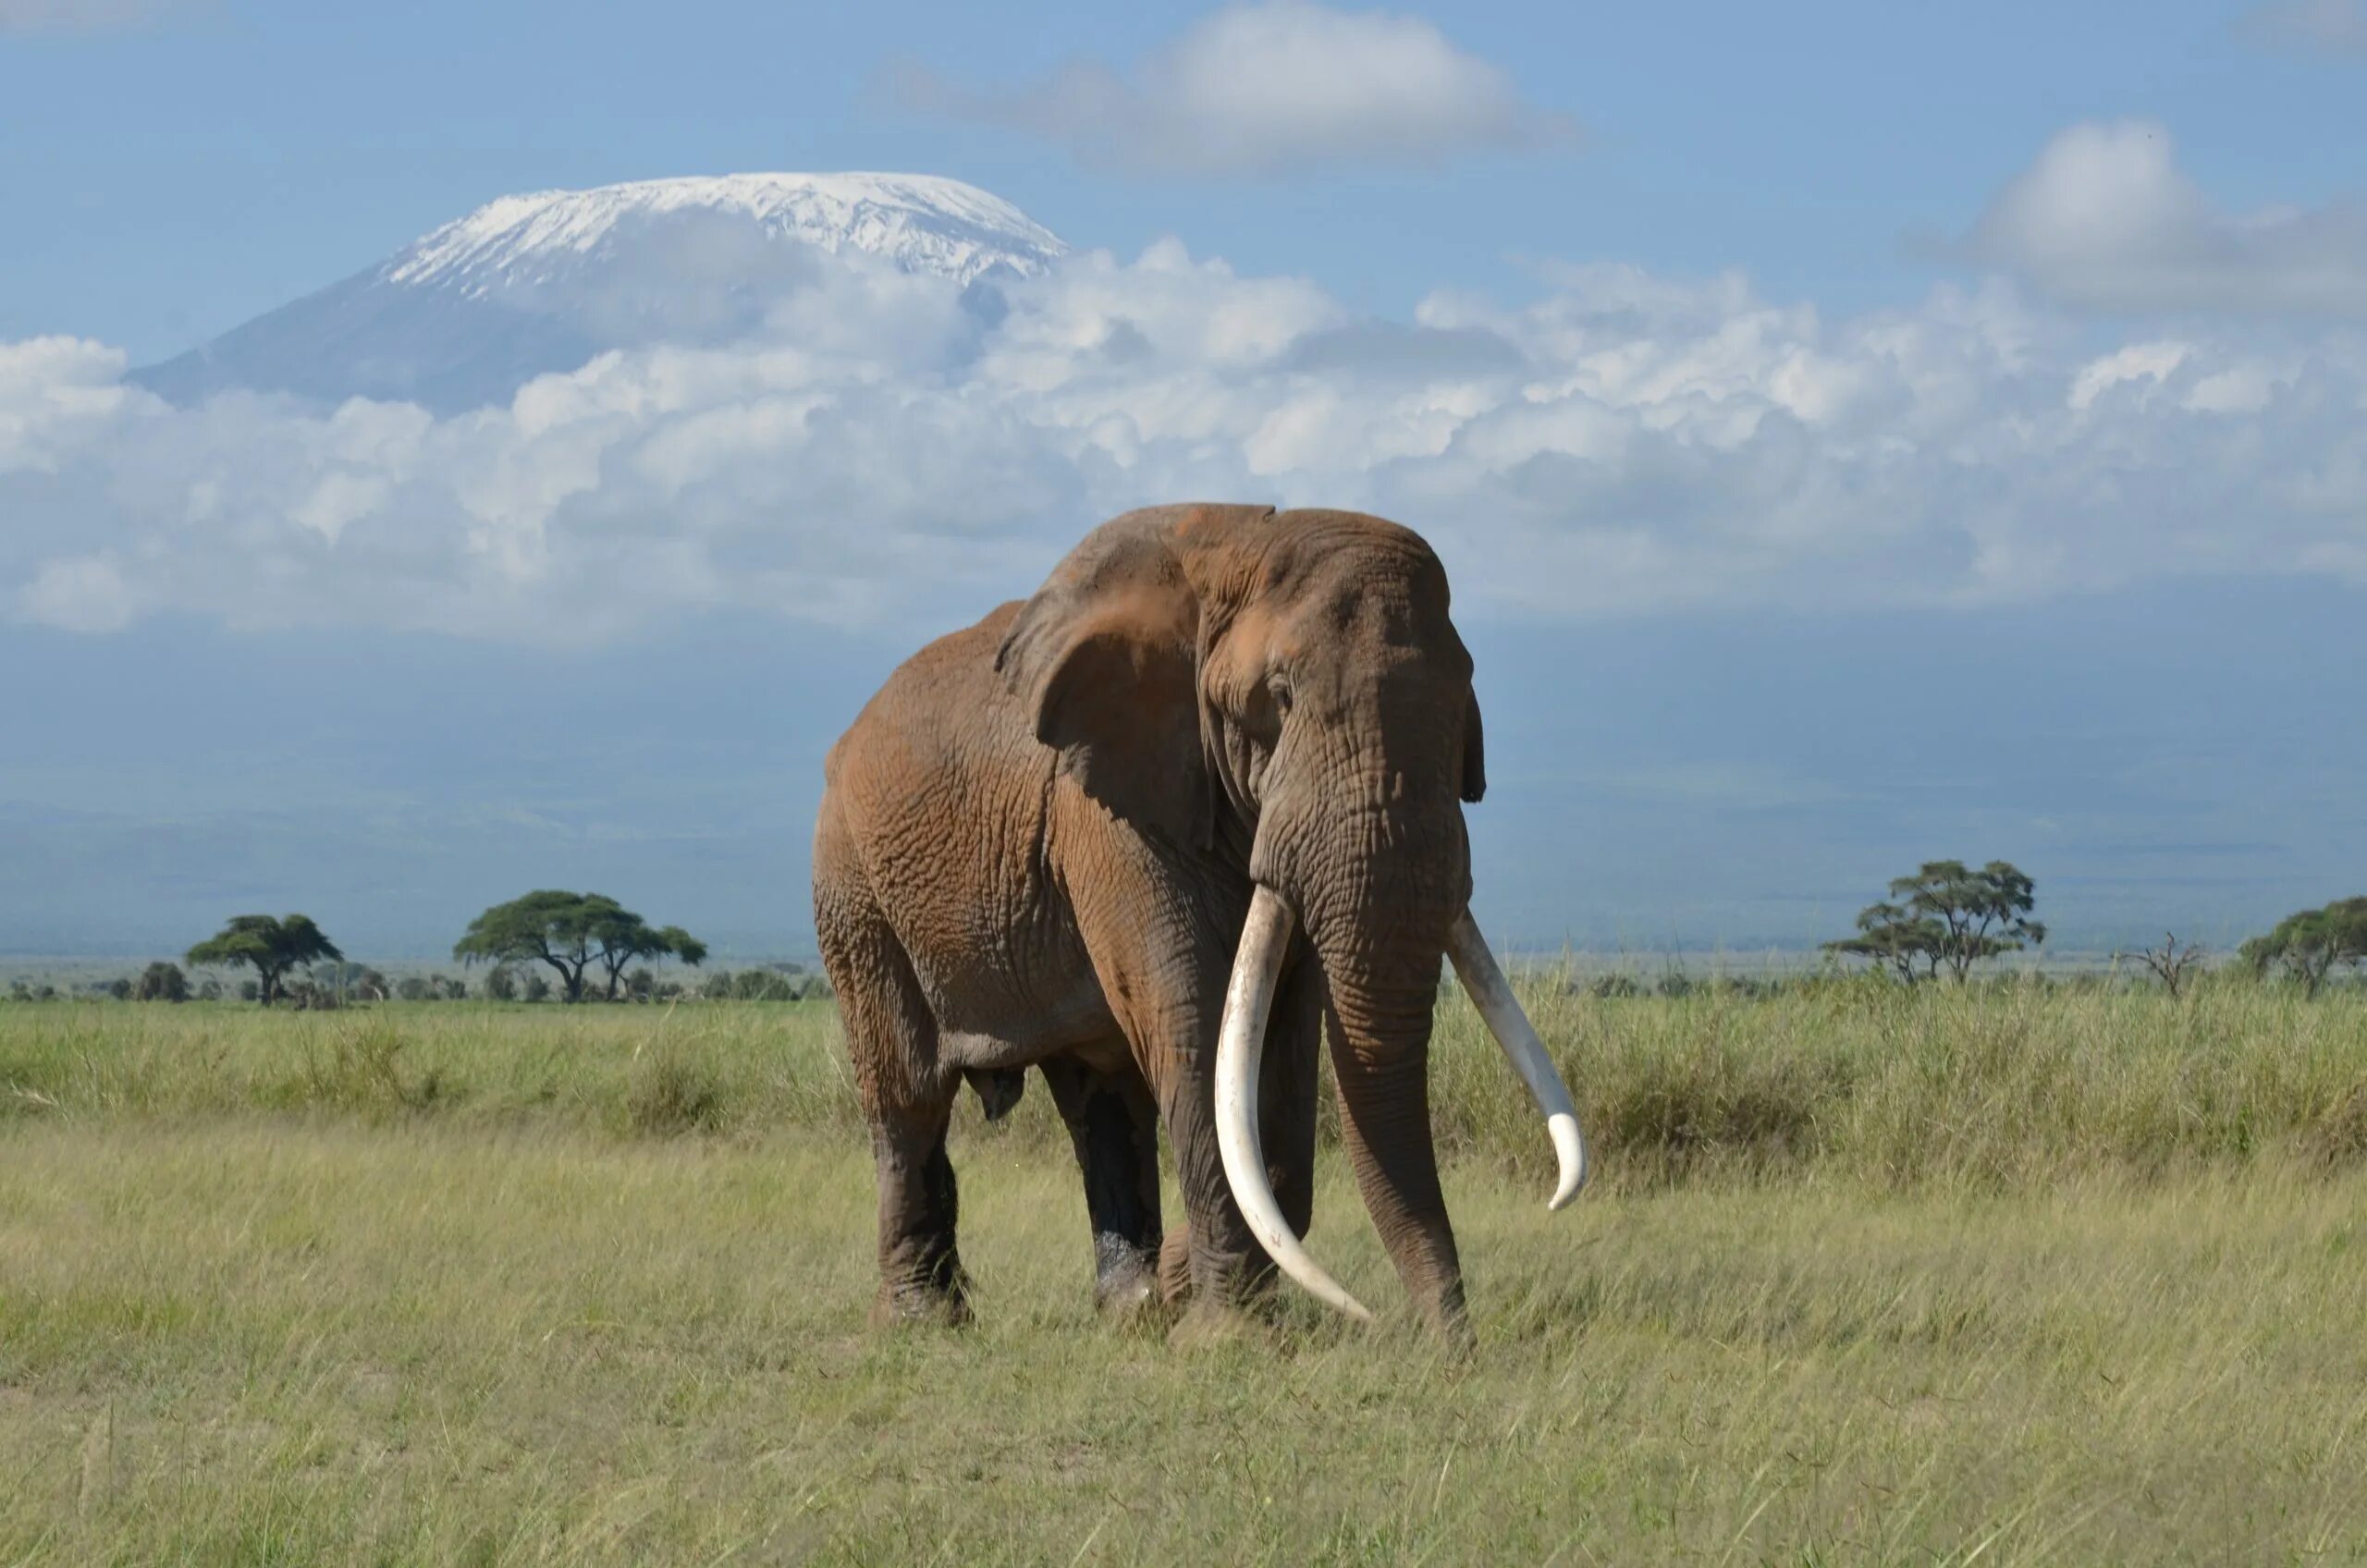 Huge elephant